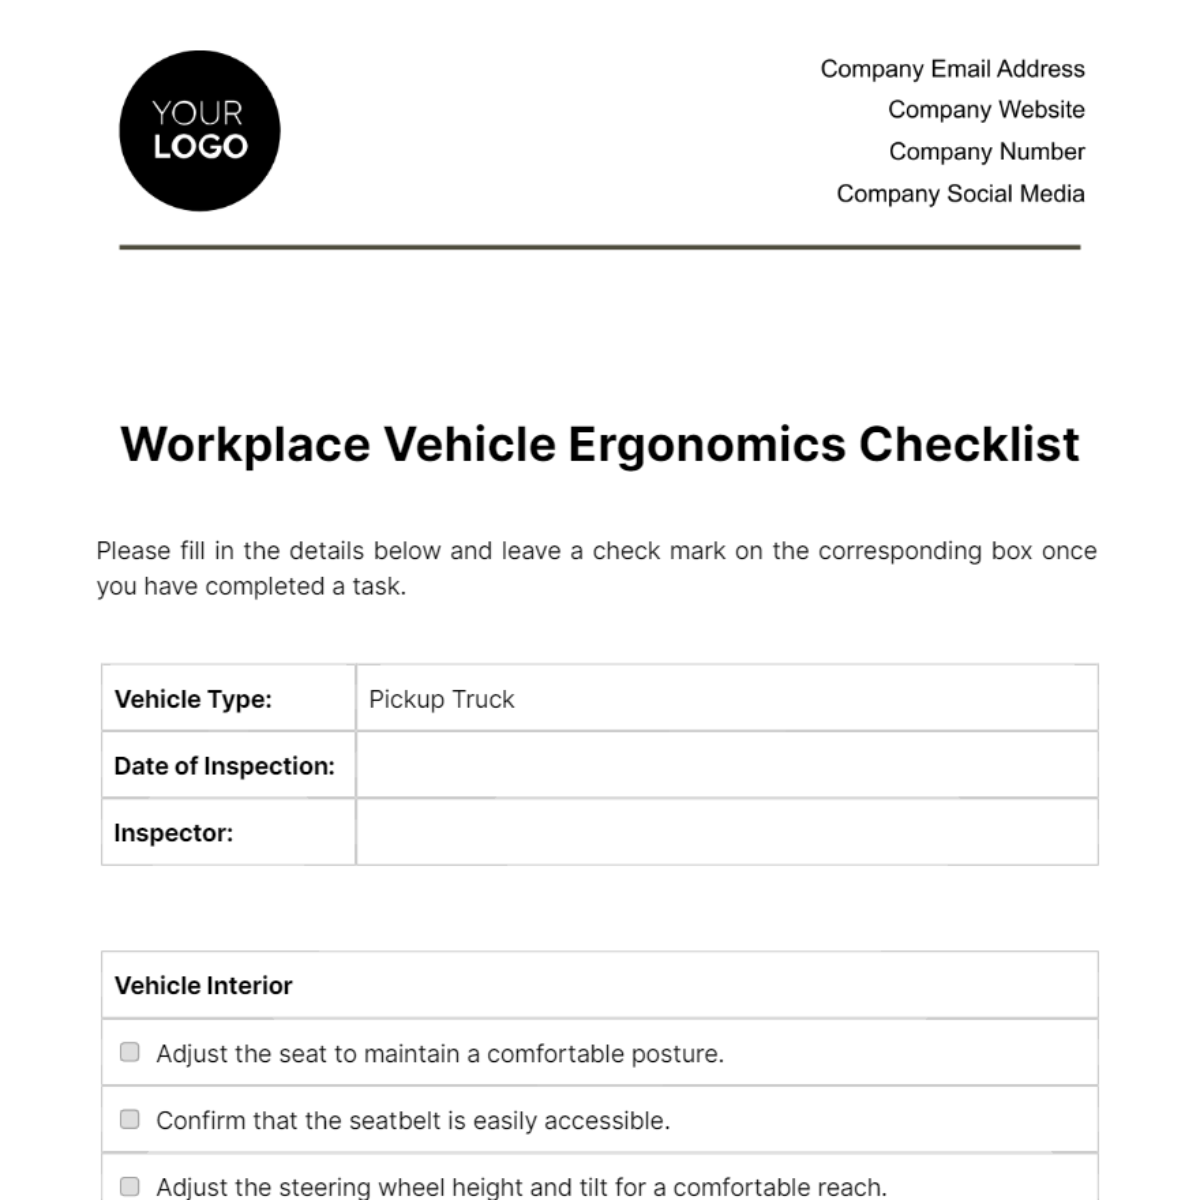 Free Workplace Vehicle Ergonomics Checklist Template